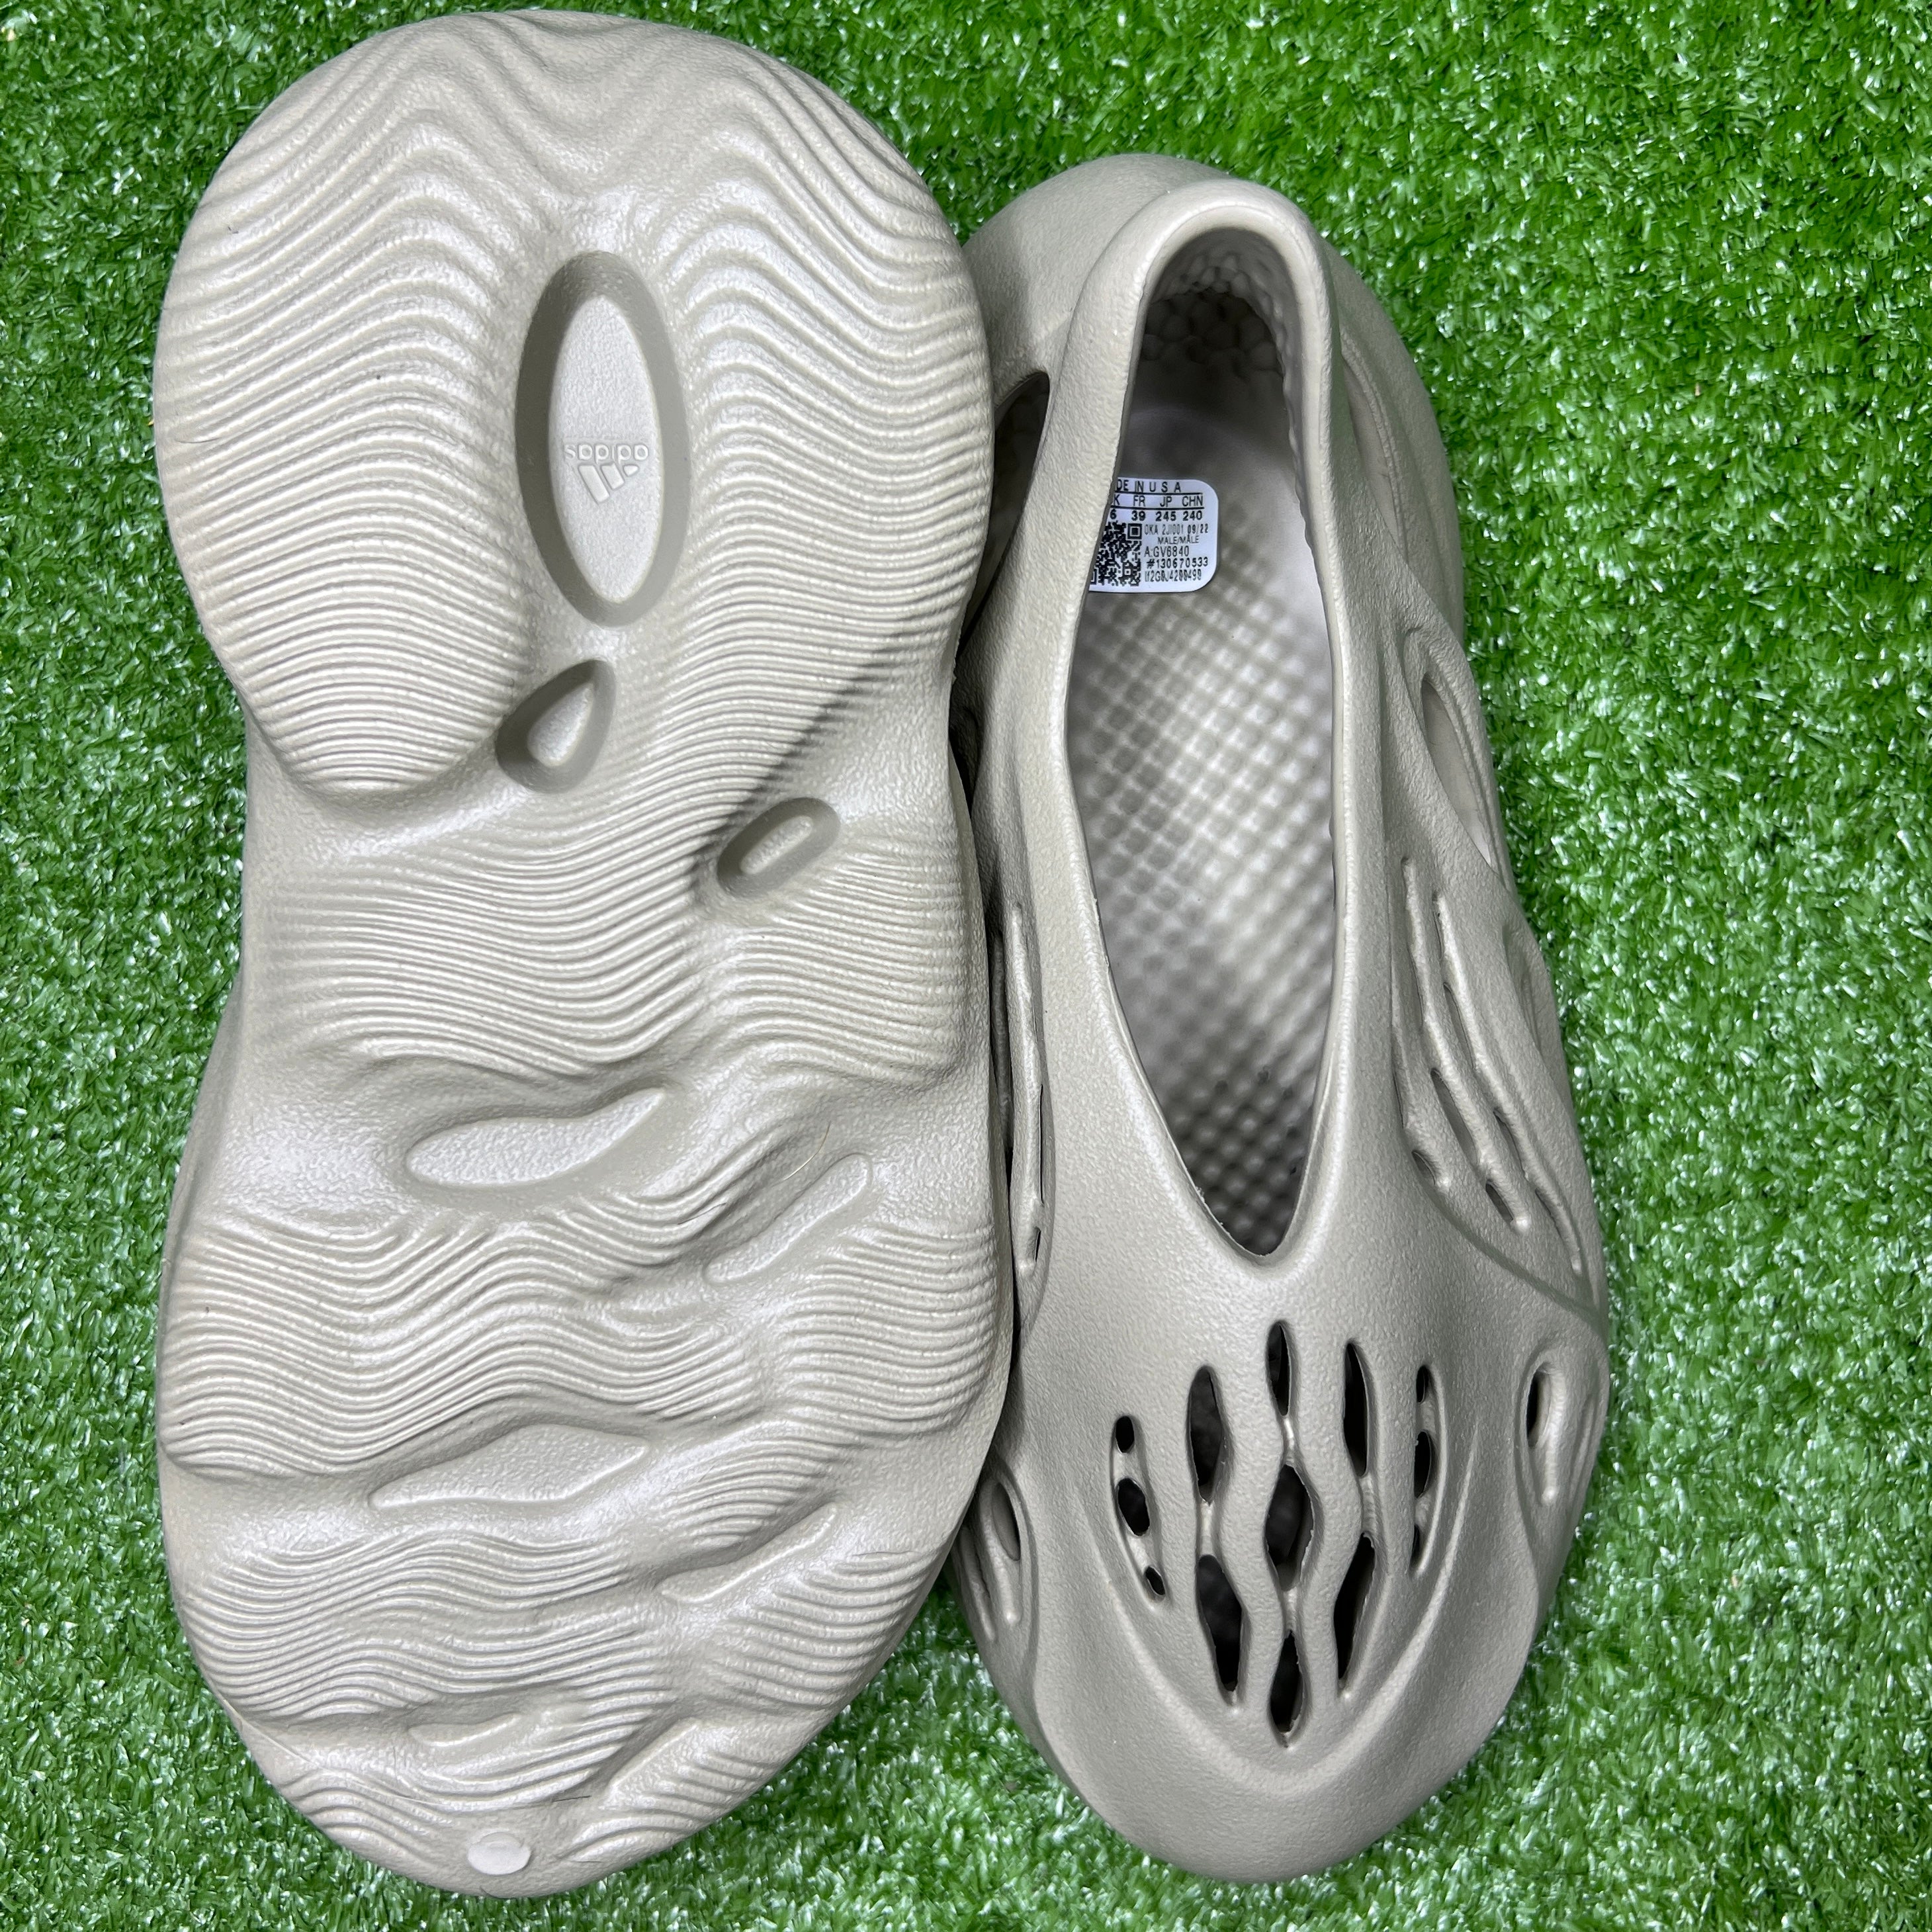 adidas Yeezy Foam Runner “Stone Salt” – Glorified Kicks